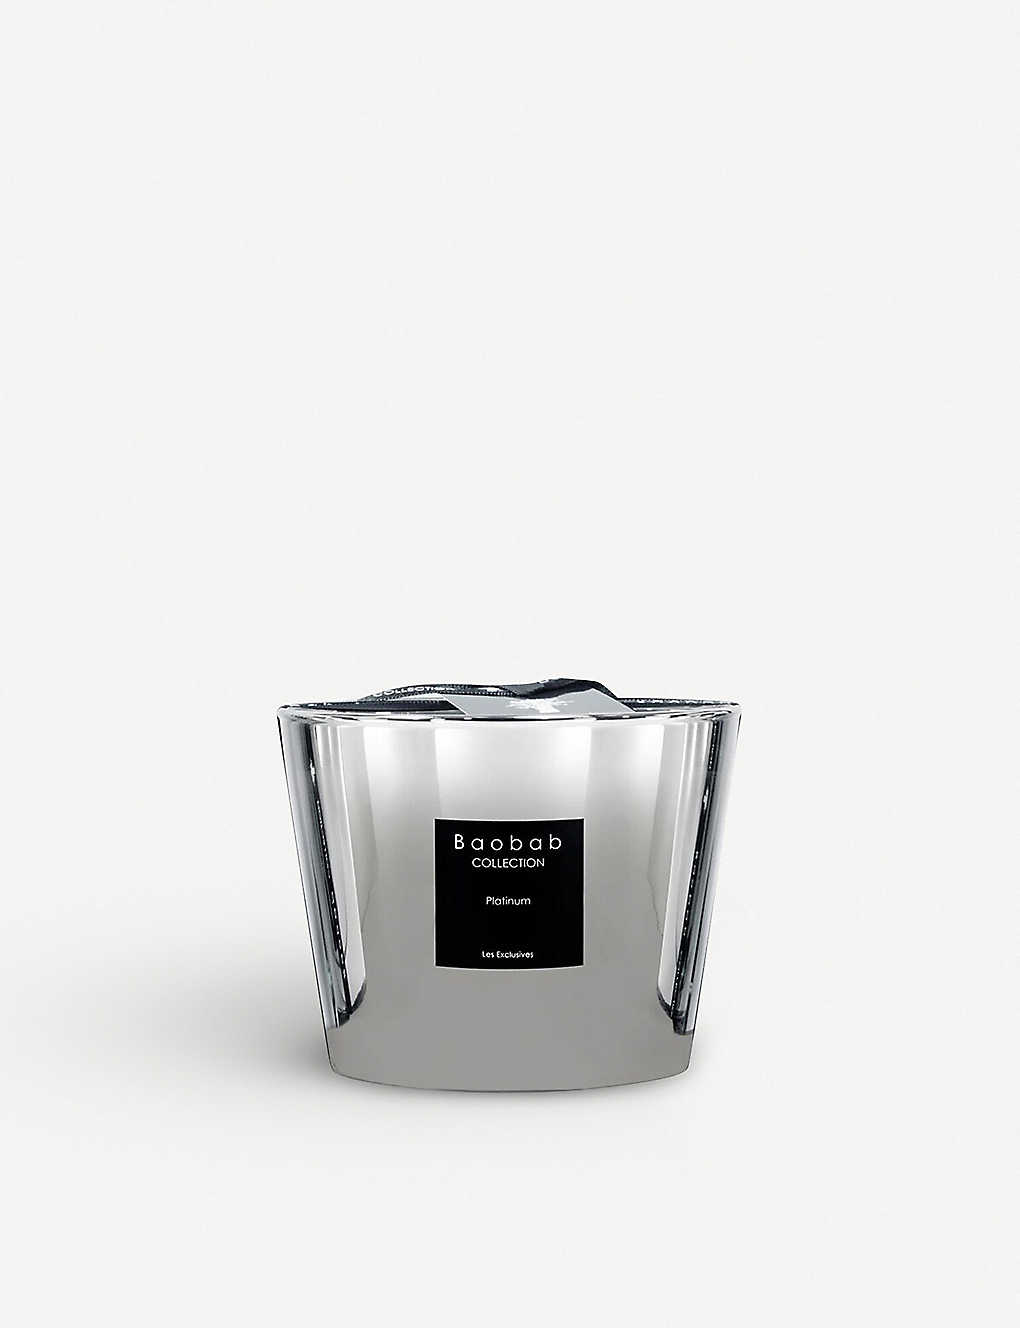 BAOBAB COLLECTION プラチナム マックス 10 センテッドキャンドル 500g Platinum Max 10 scented candle 500g